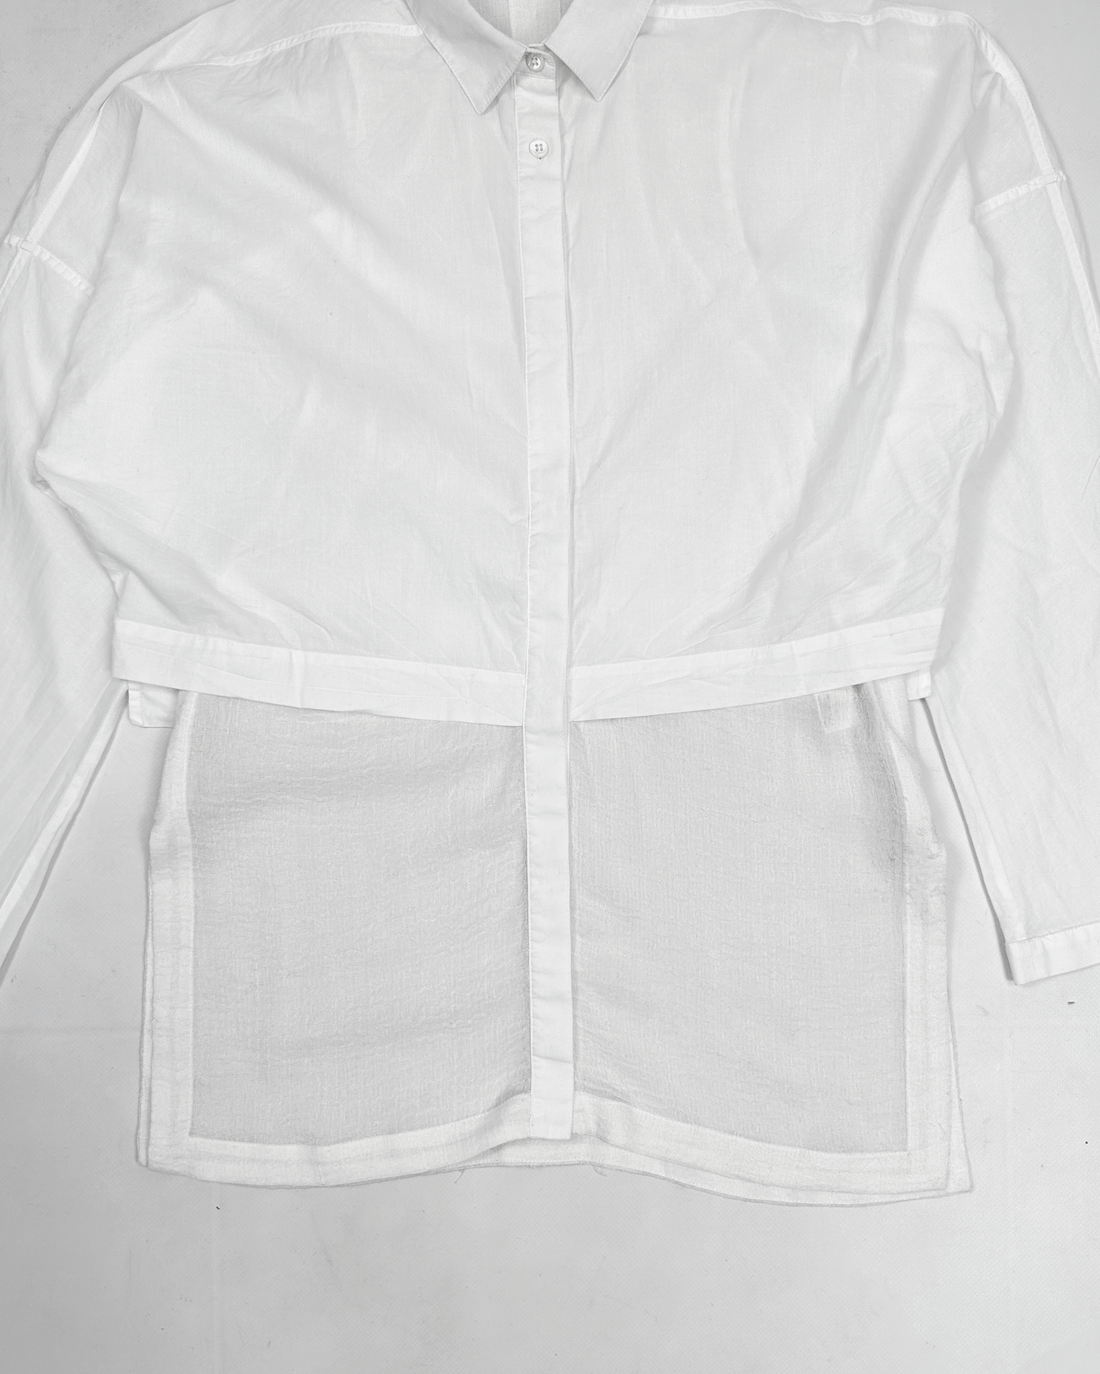 Helmut Lang 2-Layer White Shirt FW 2002